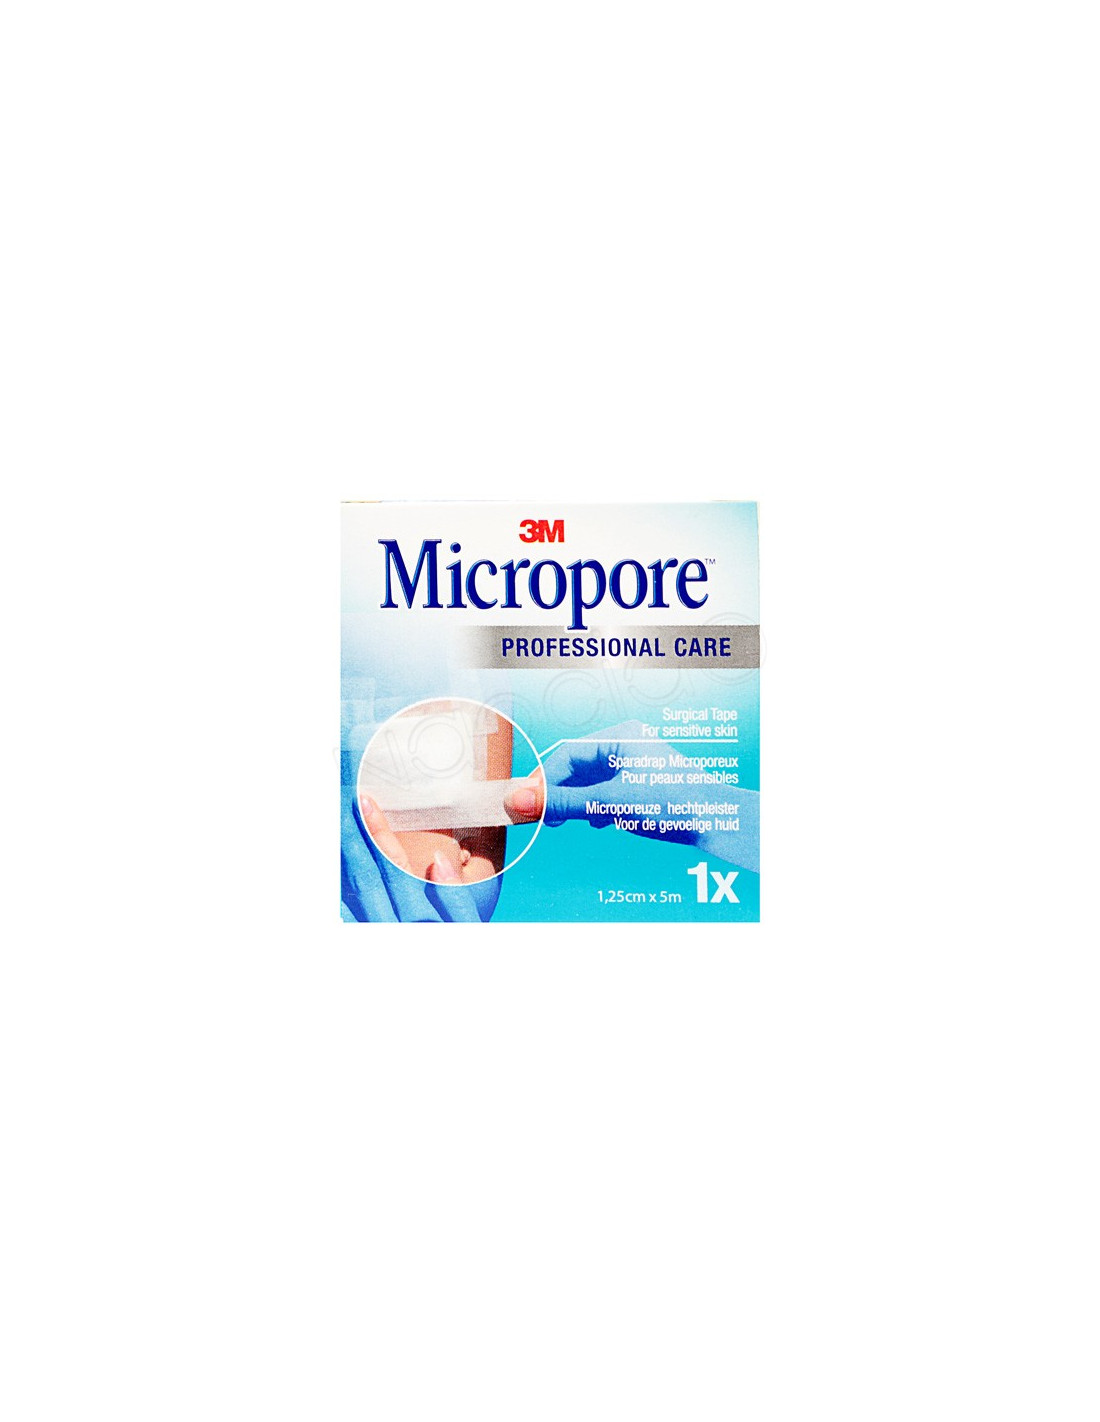 3M Micropore Sparadrap Microporeux